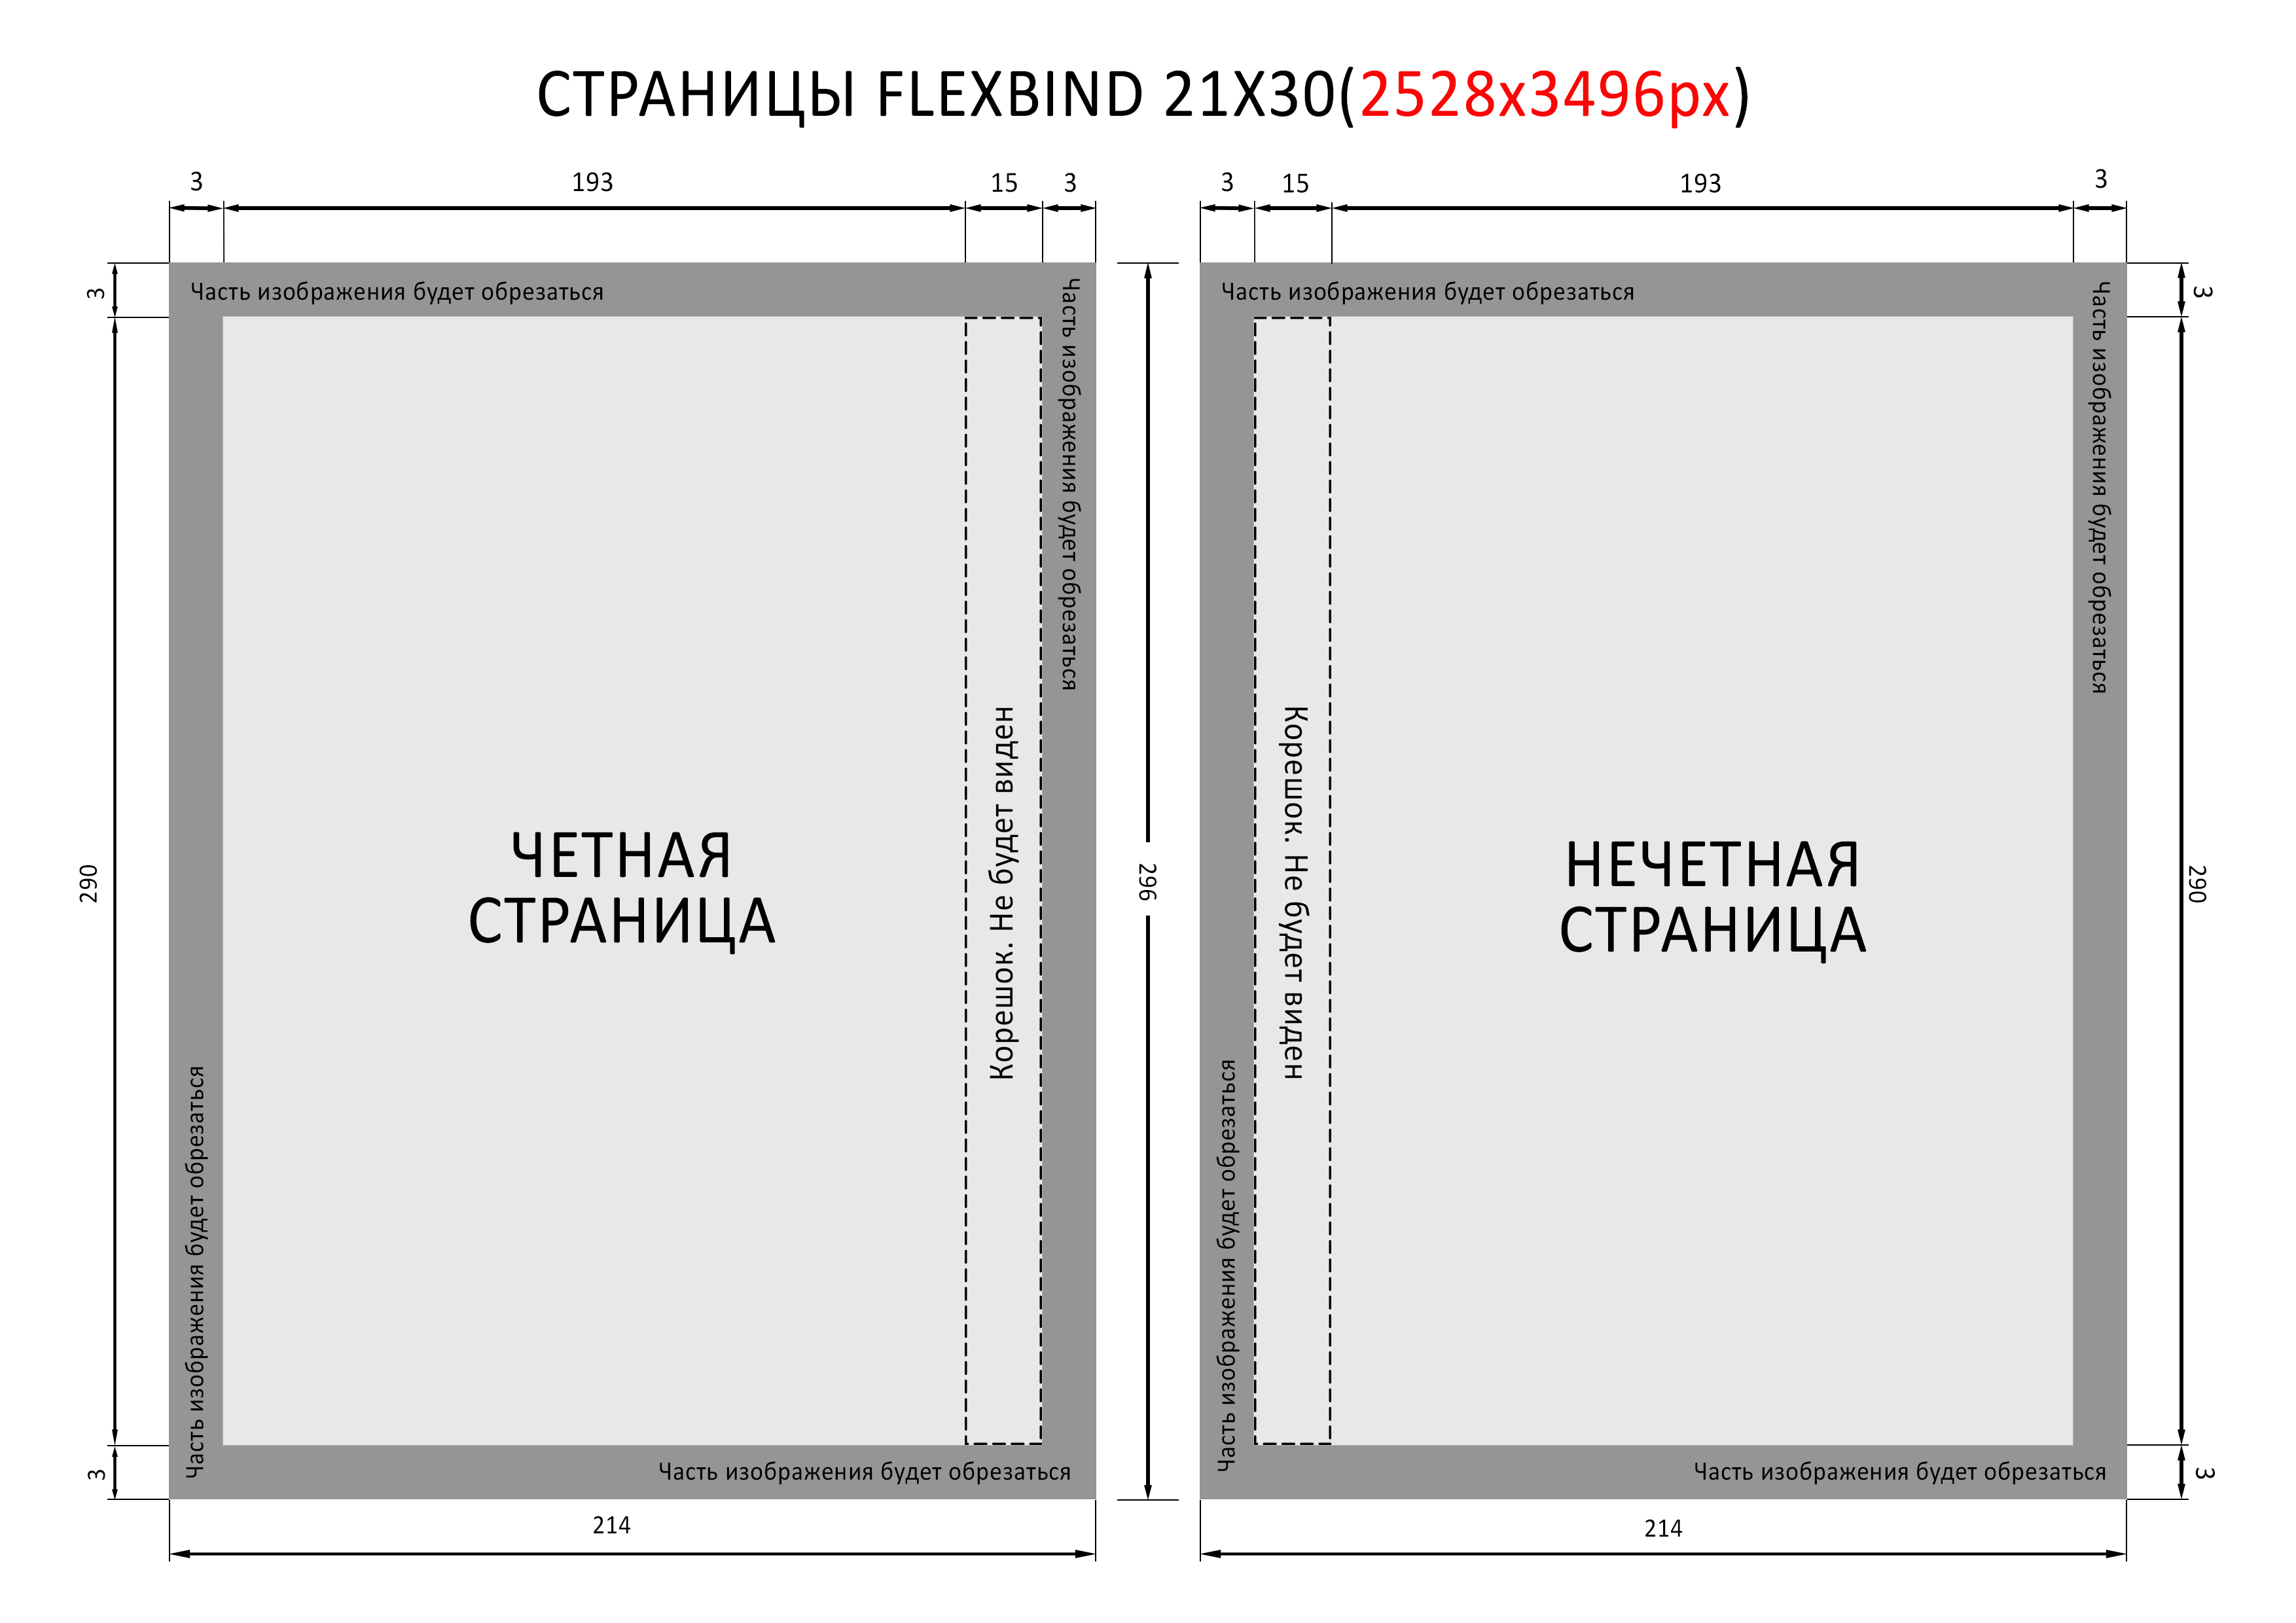 Flexbind 21x30